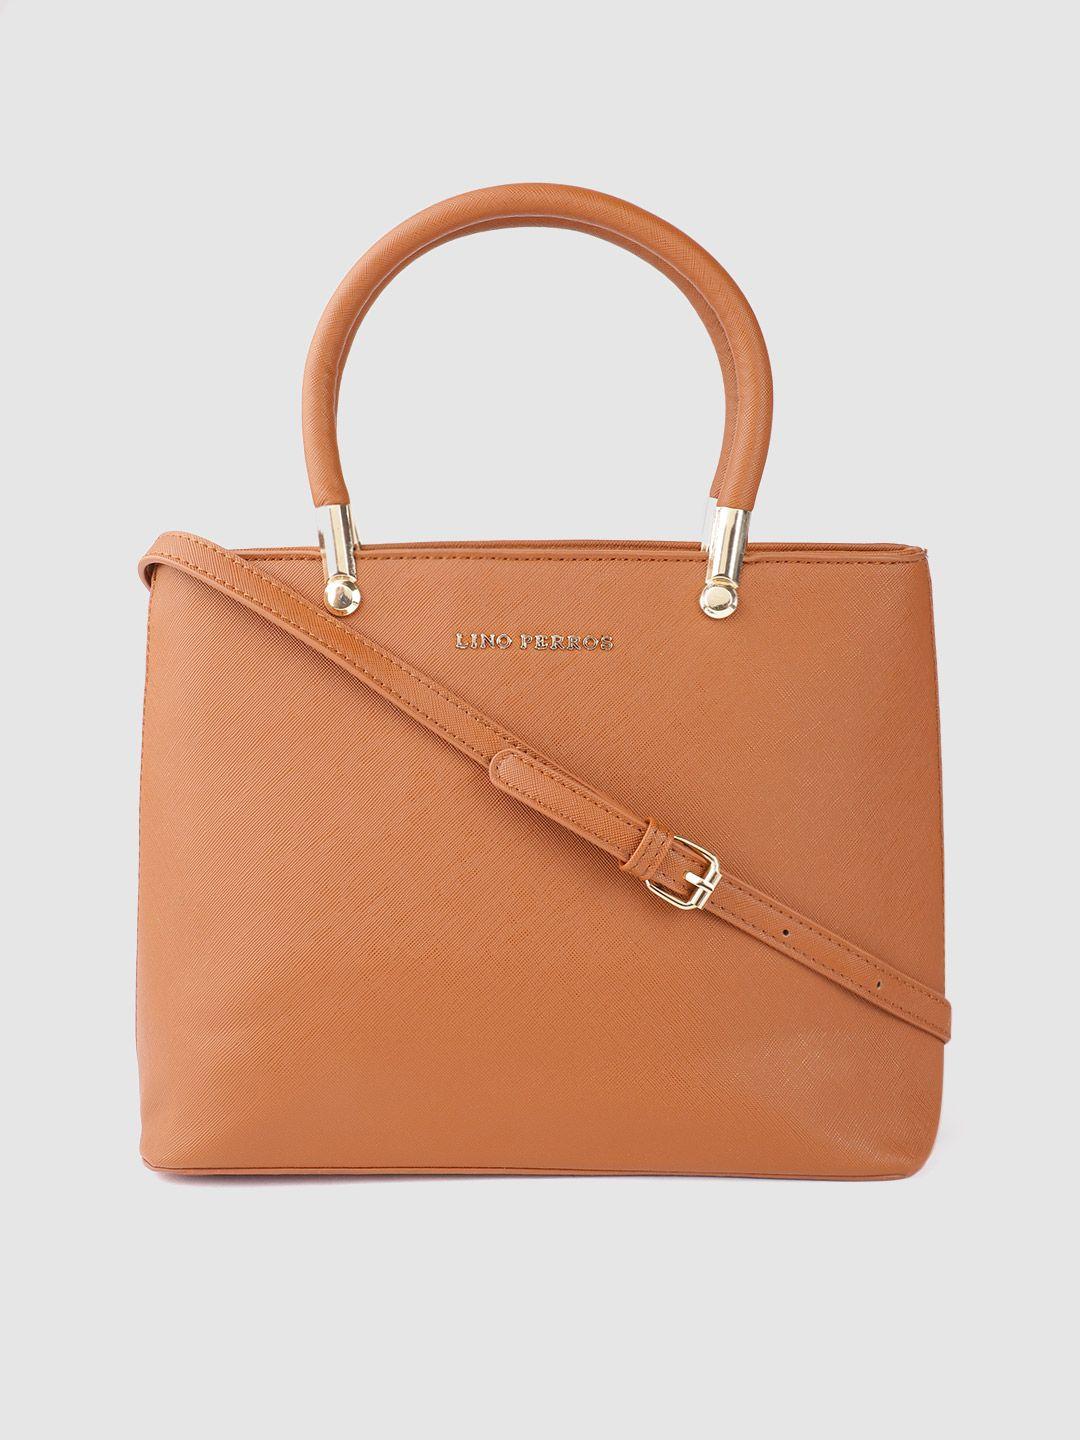 lino perros women tan brown solid structured handheld bag